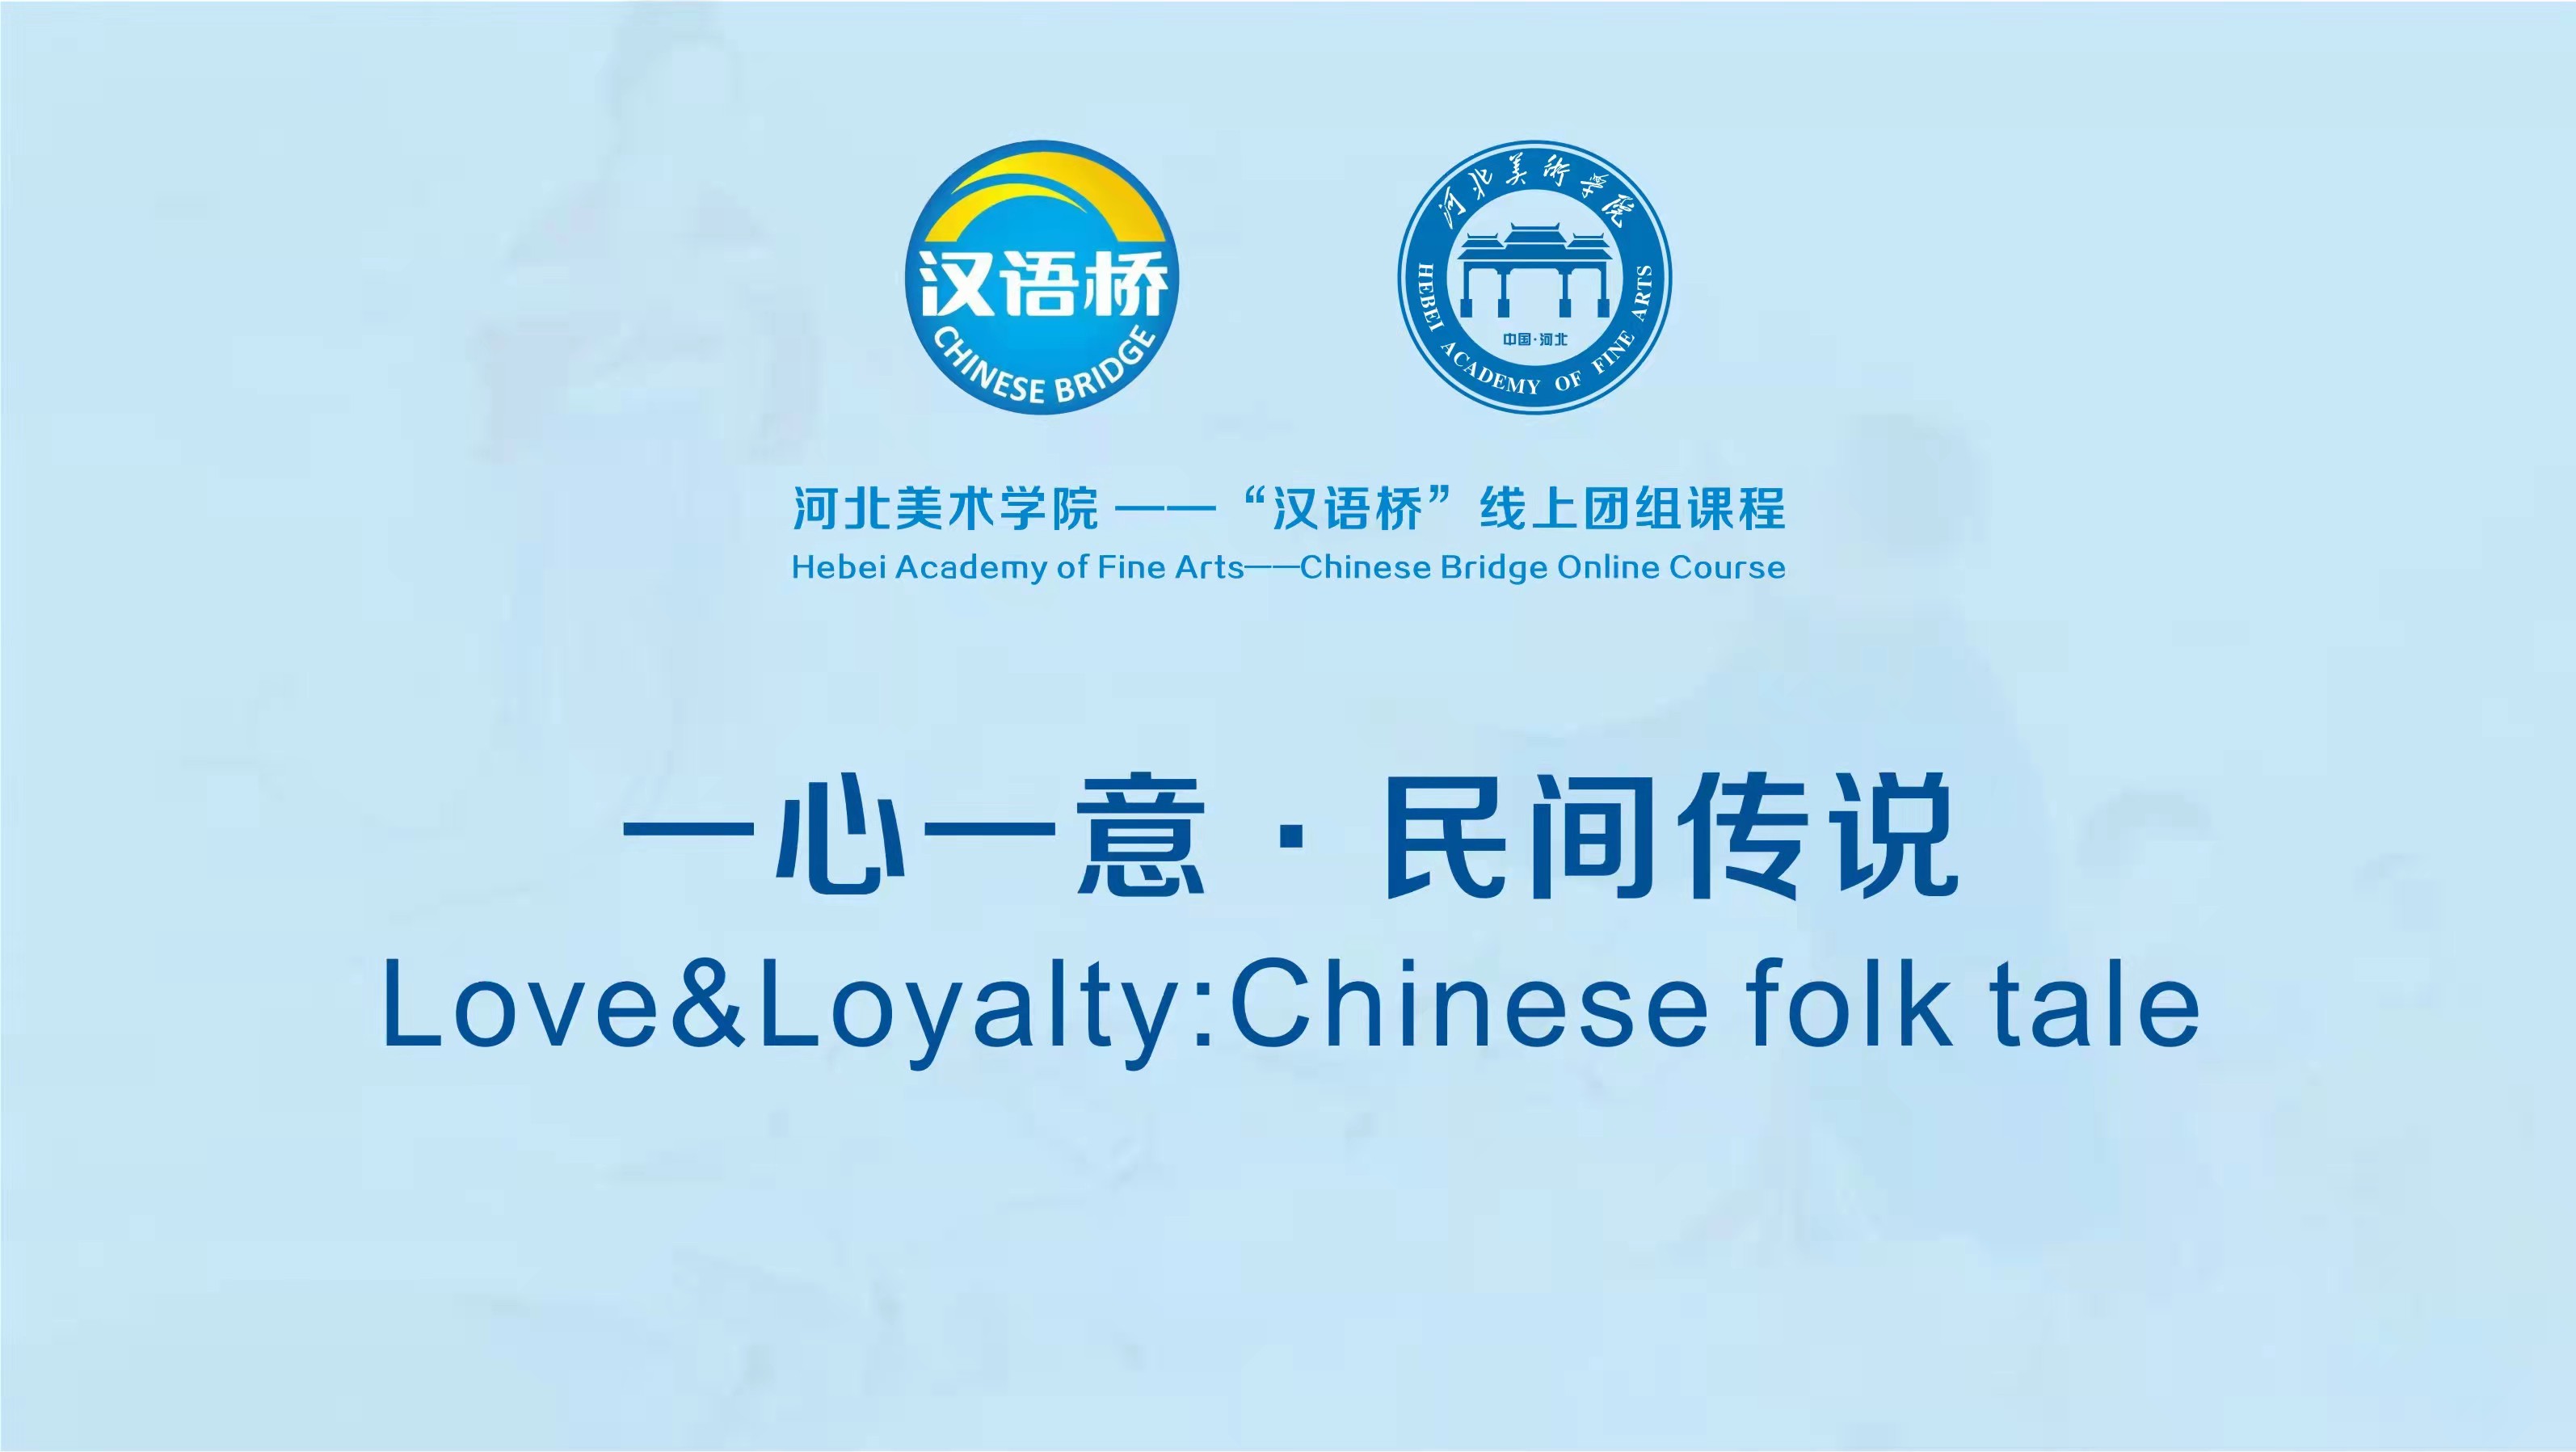 Love&Loyalty: Chinese folk tale